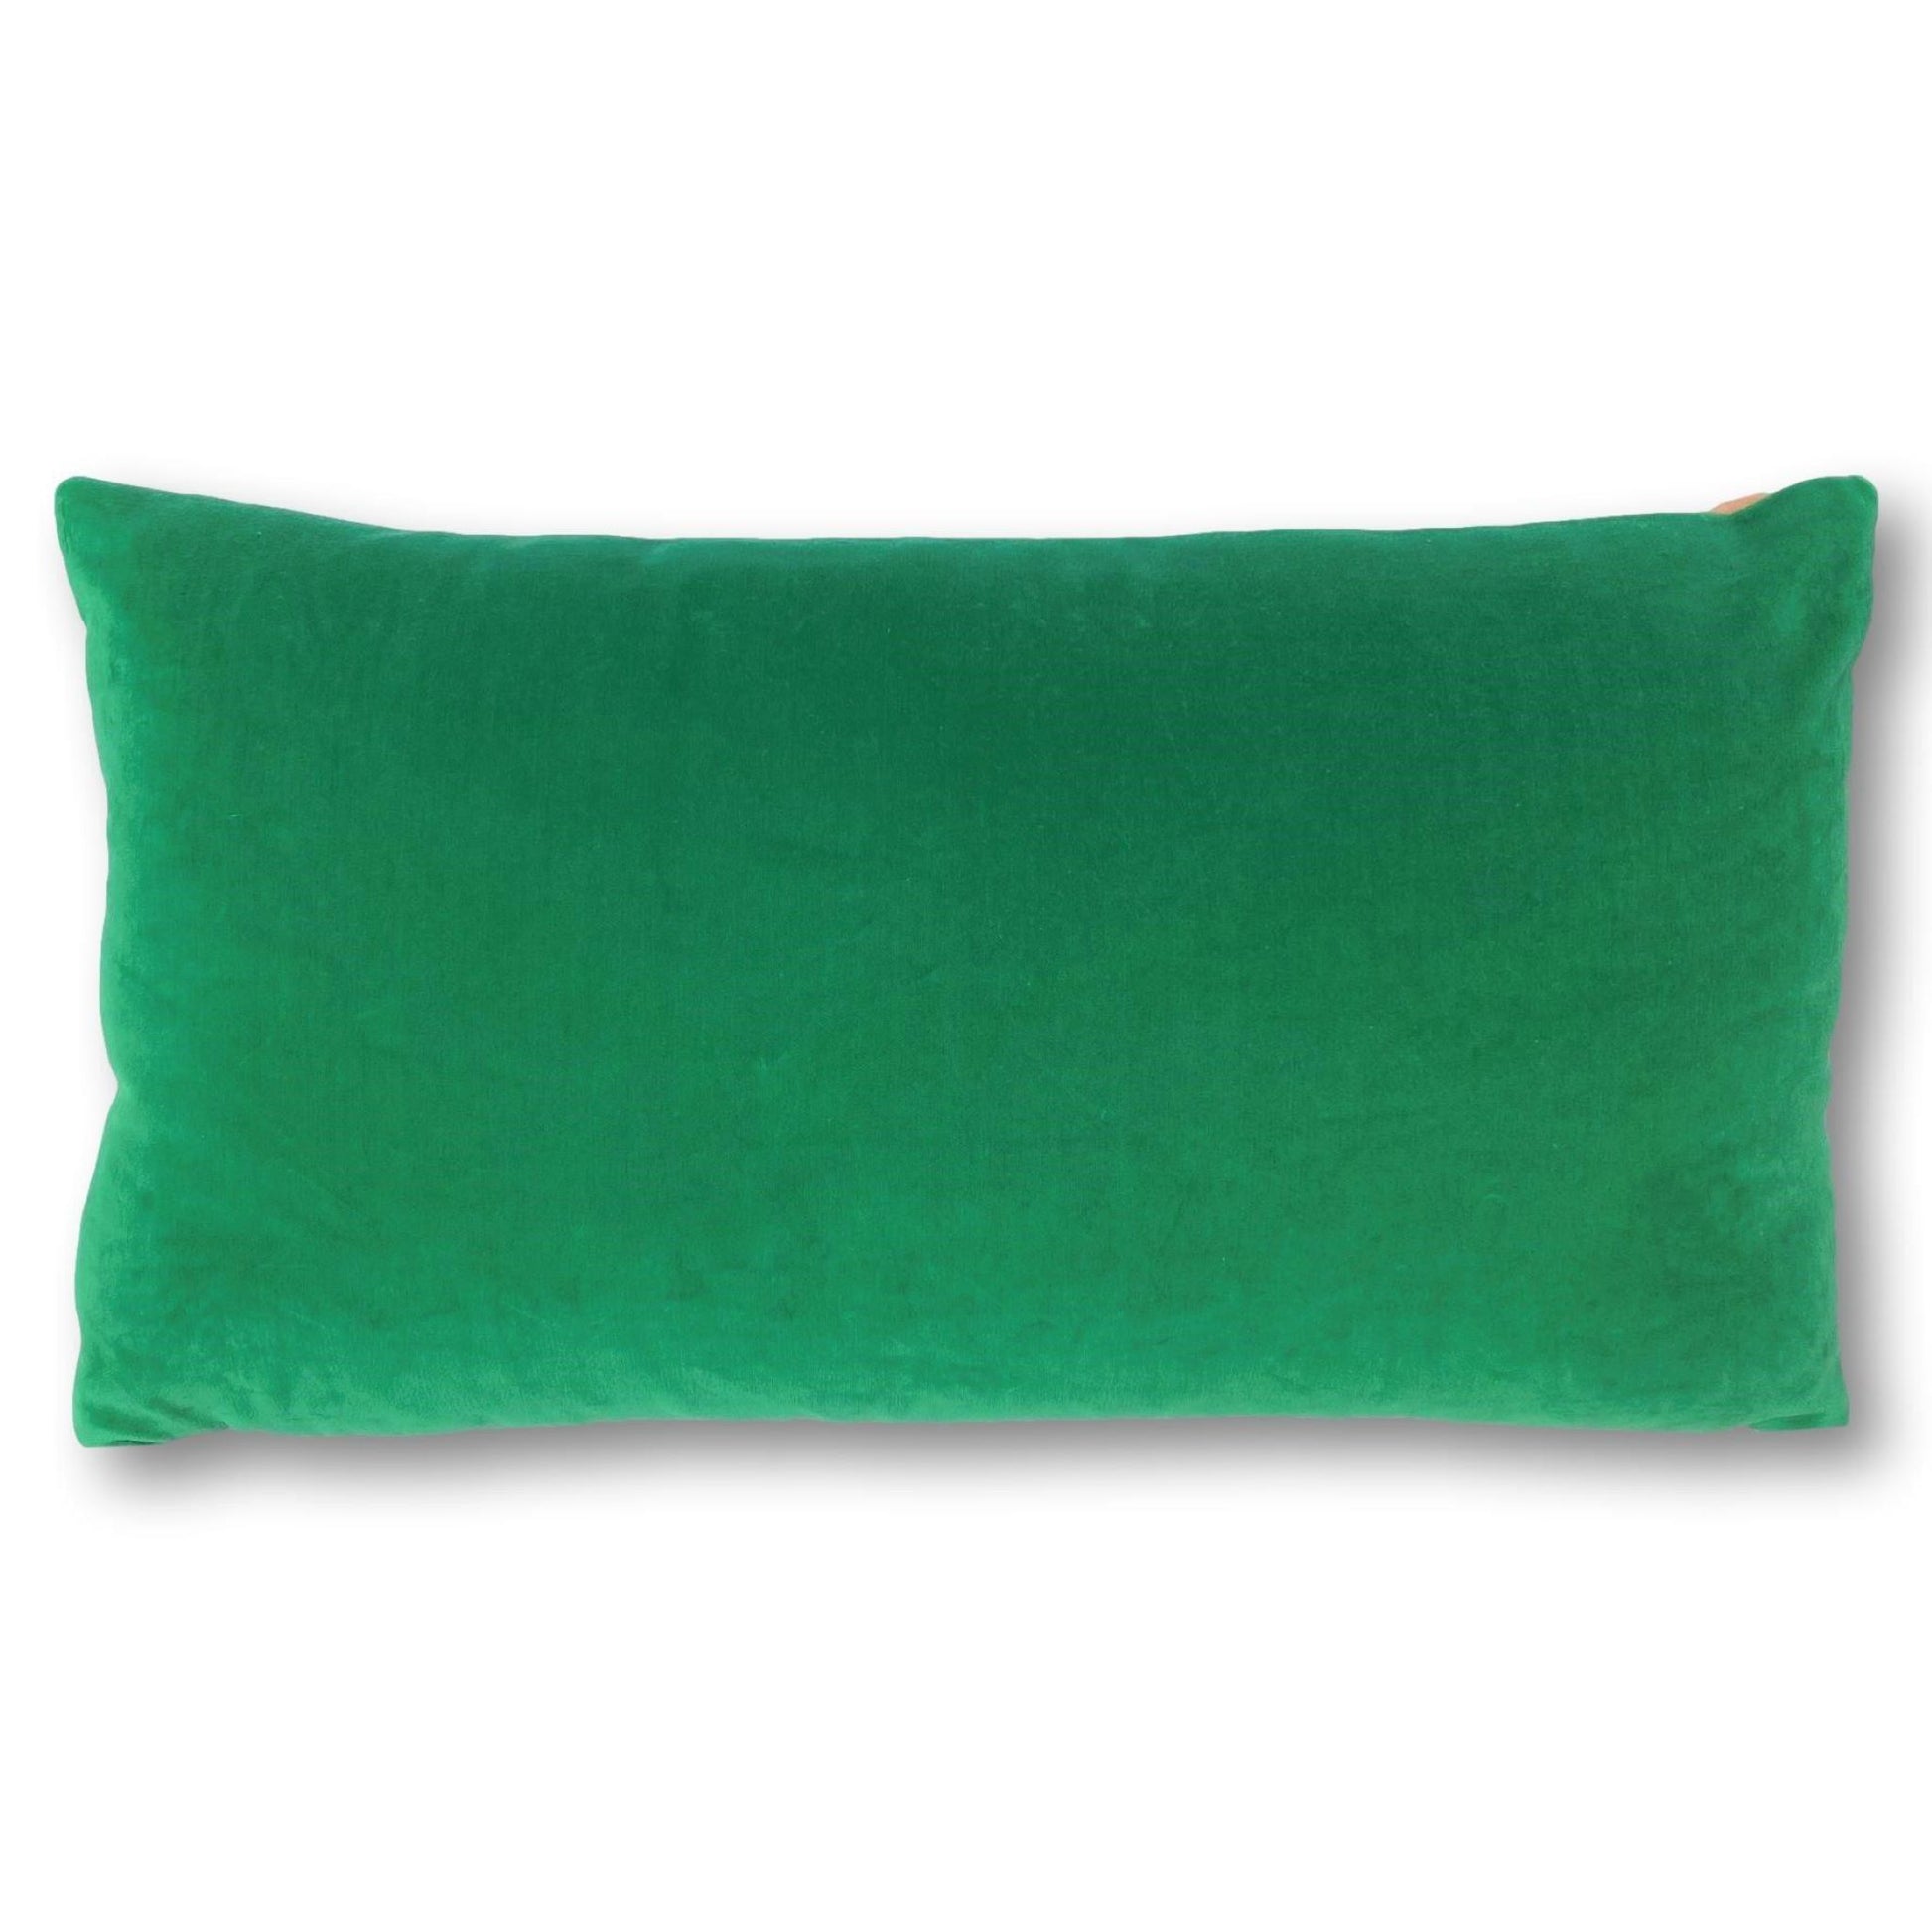 light green cushion lxue 39